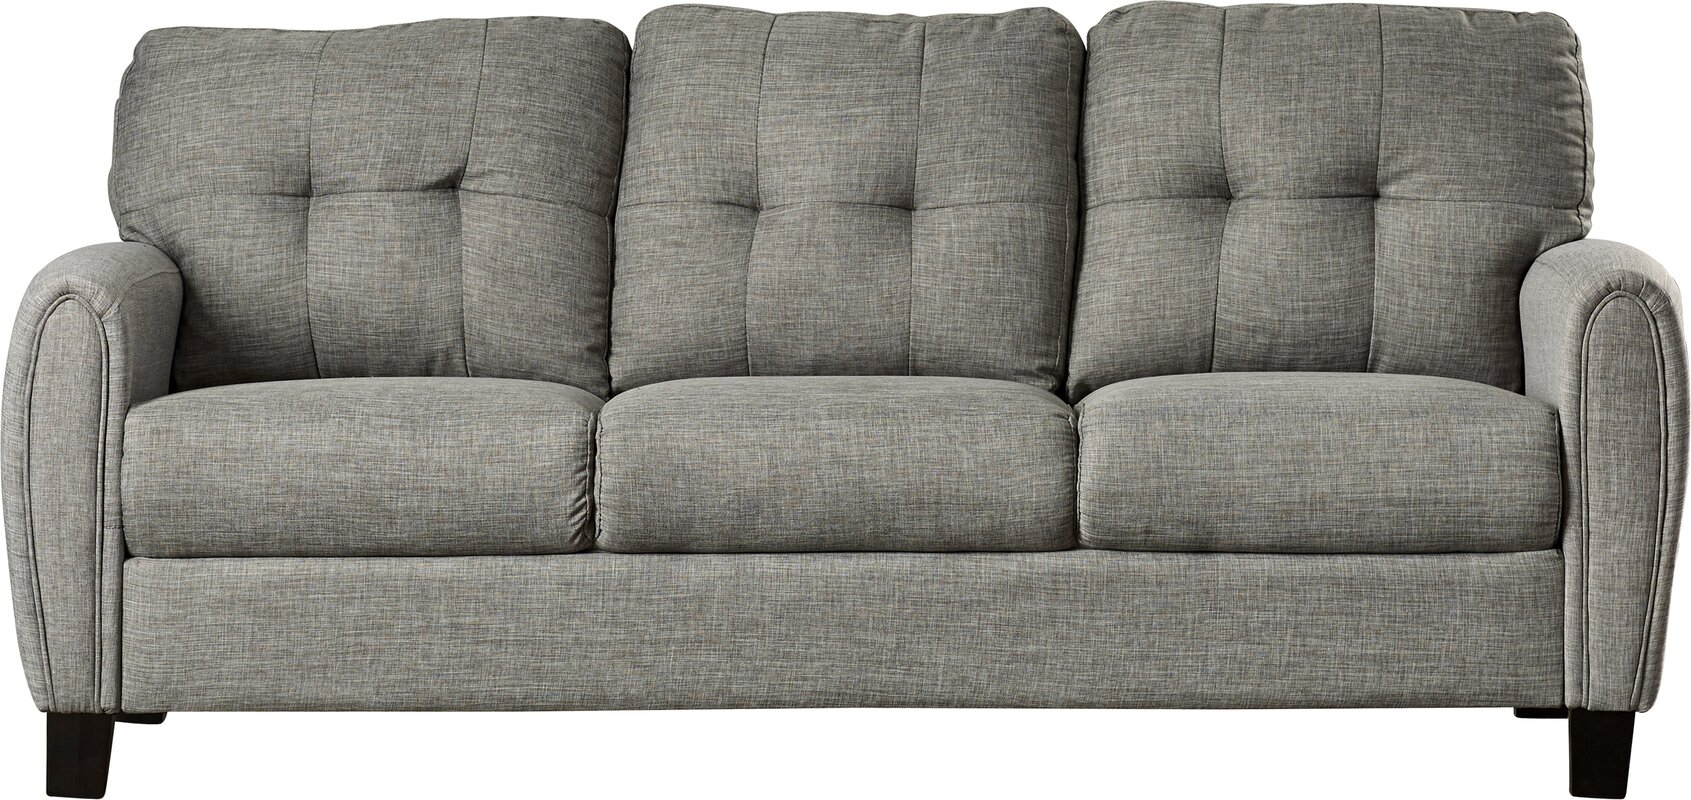 derry sofa bed wayfair